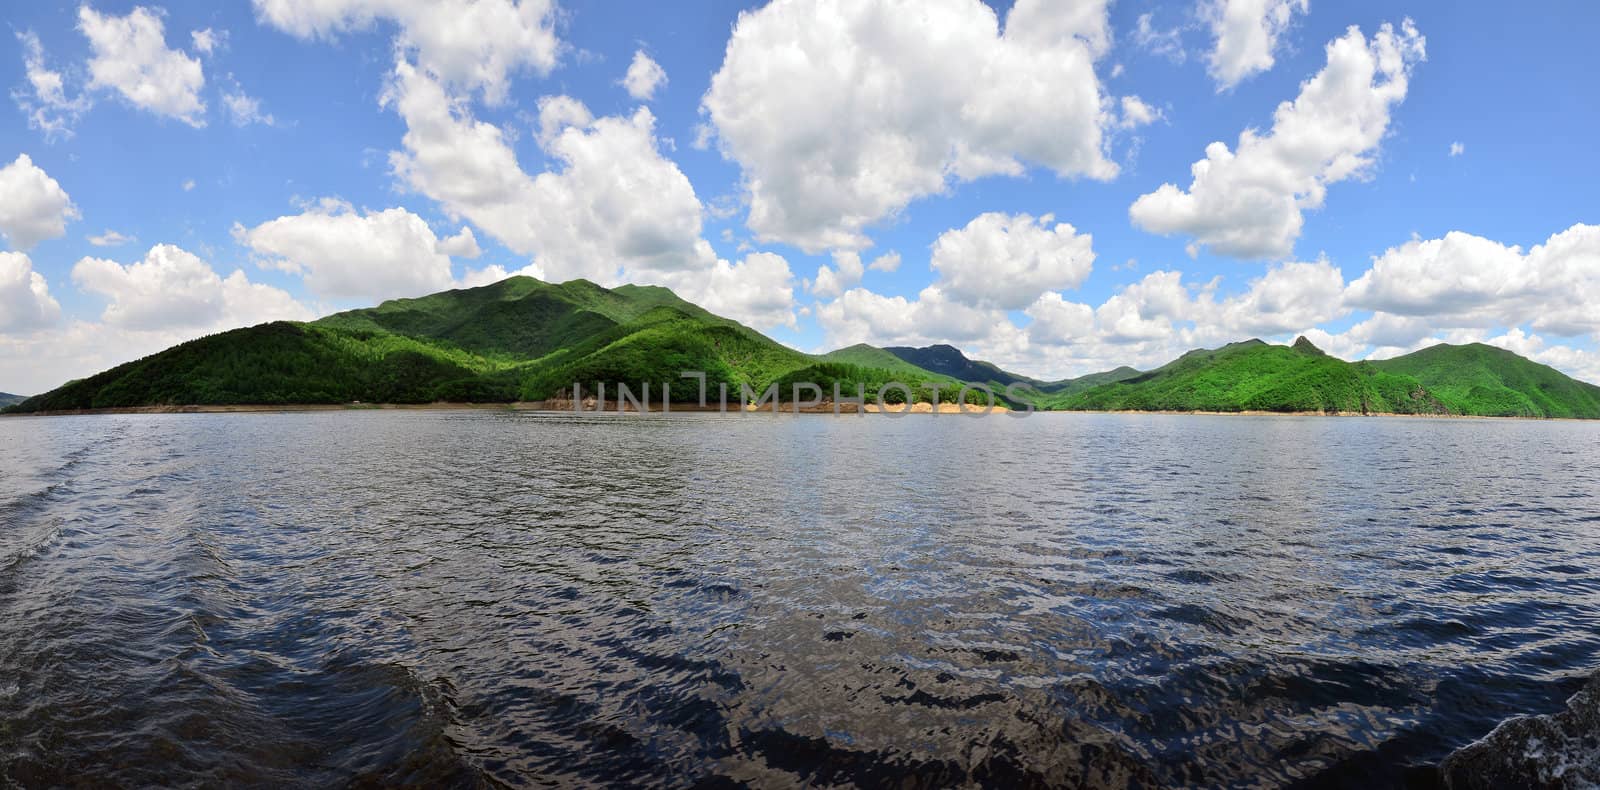 Songhua lake national park and lake in north China. Jilin province. panoramic wide angle view.